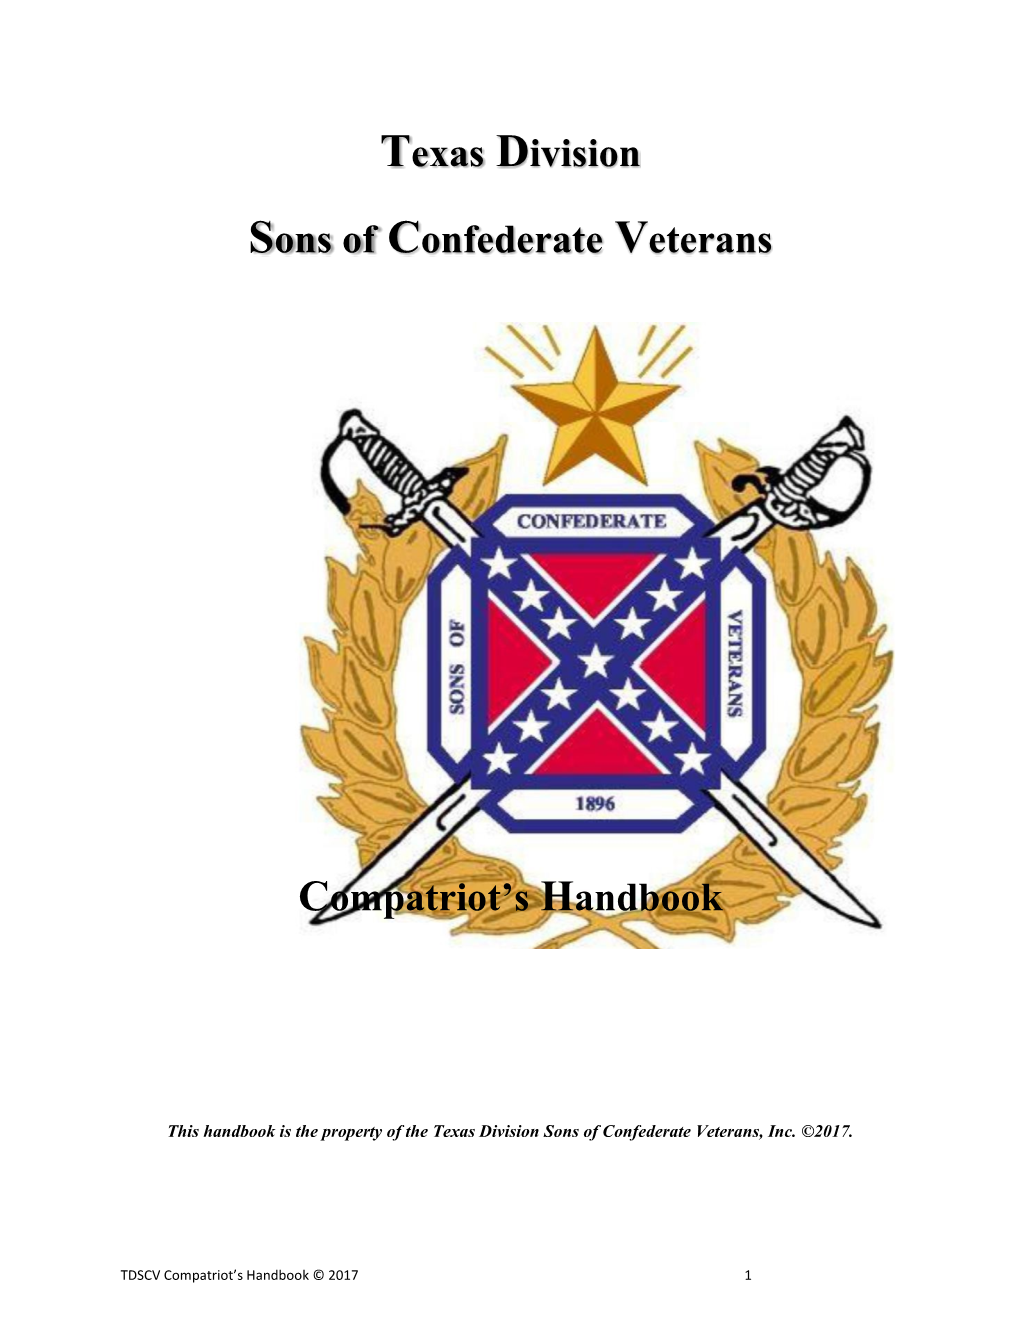 Texas Division Sons of Confederate Veterans Compatriot's Handbook